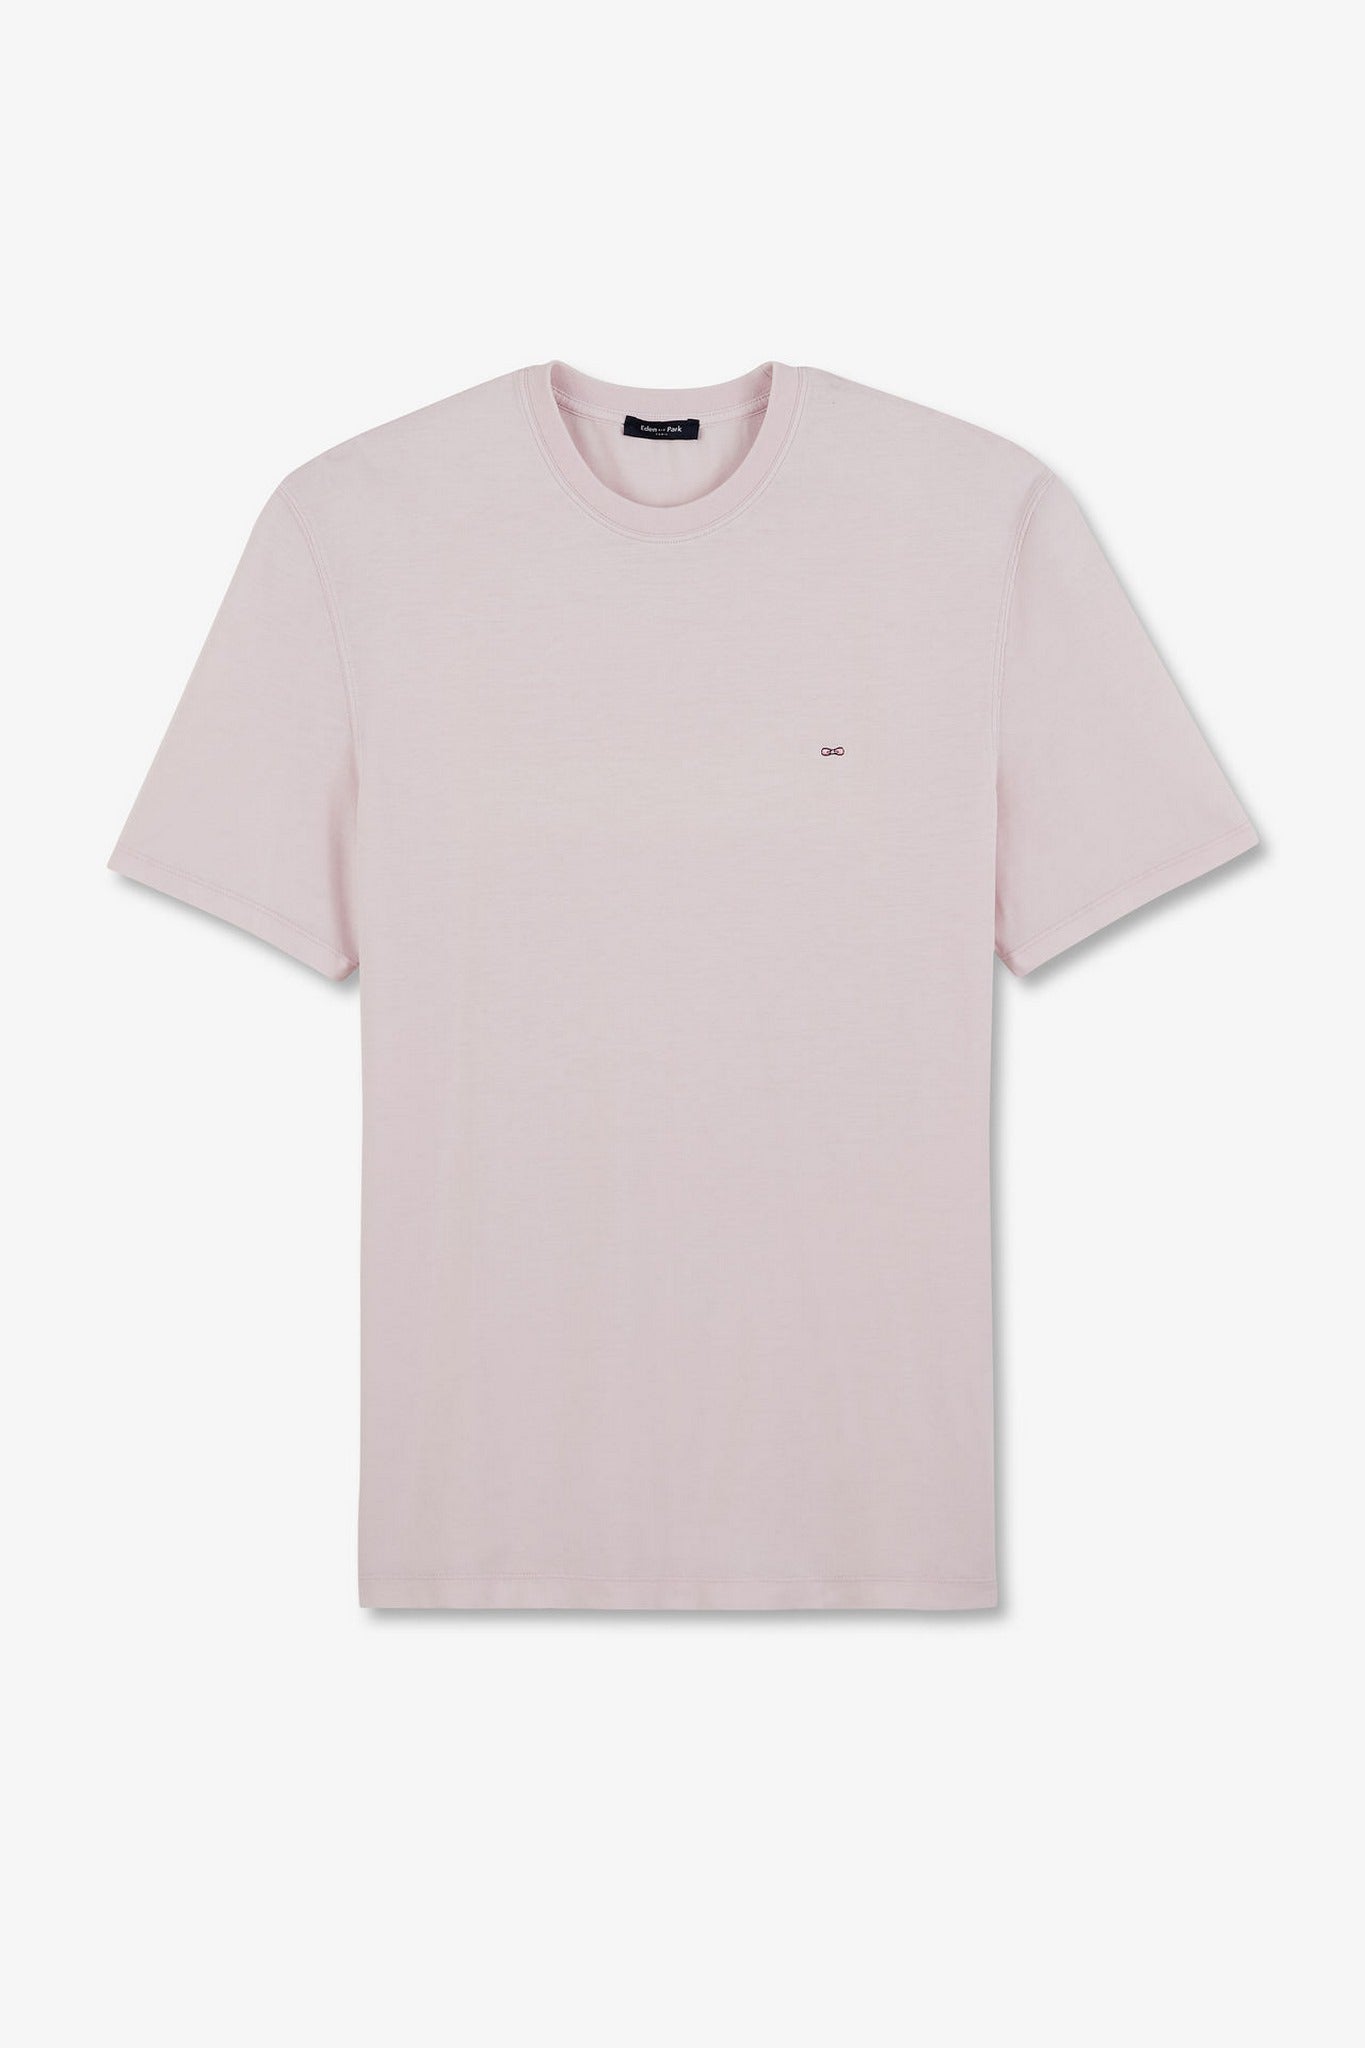 T-shirt manches courtes rose uni - Image 3